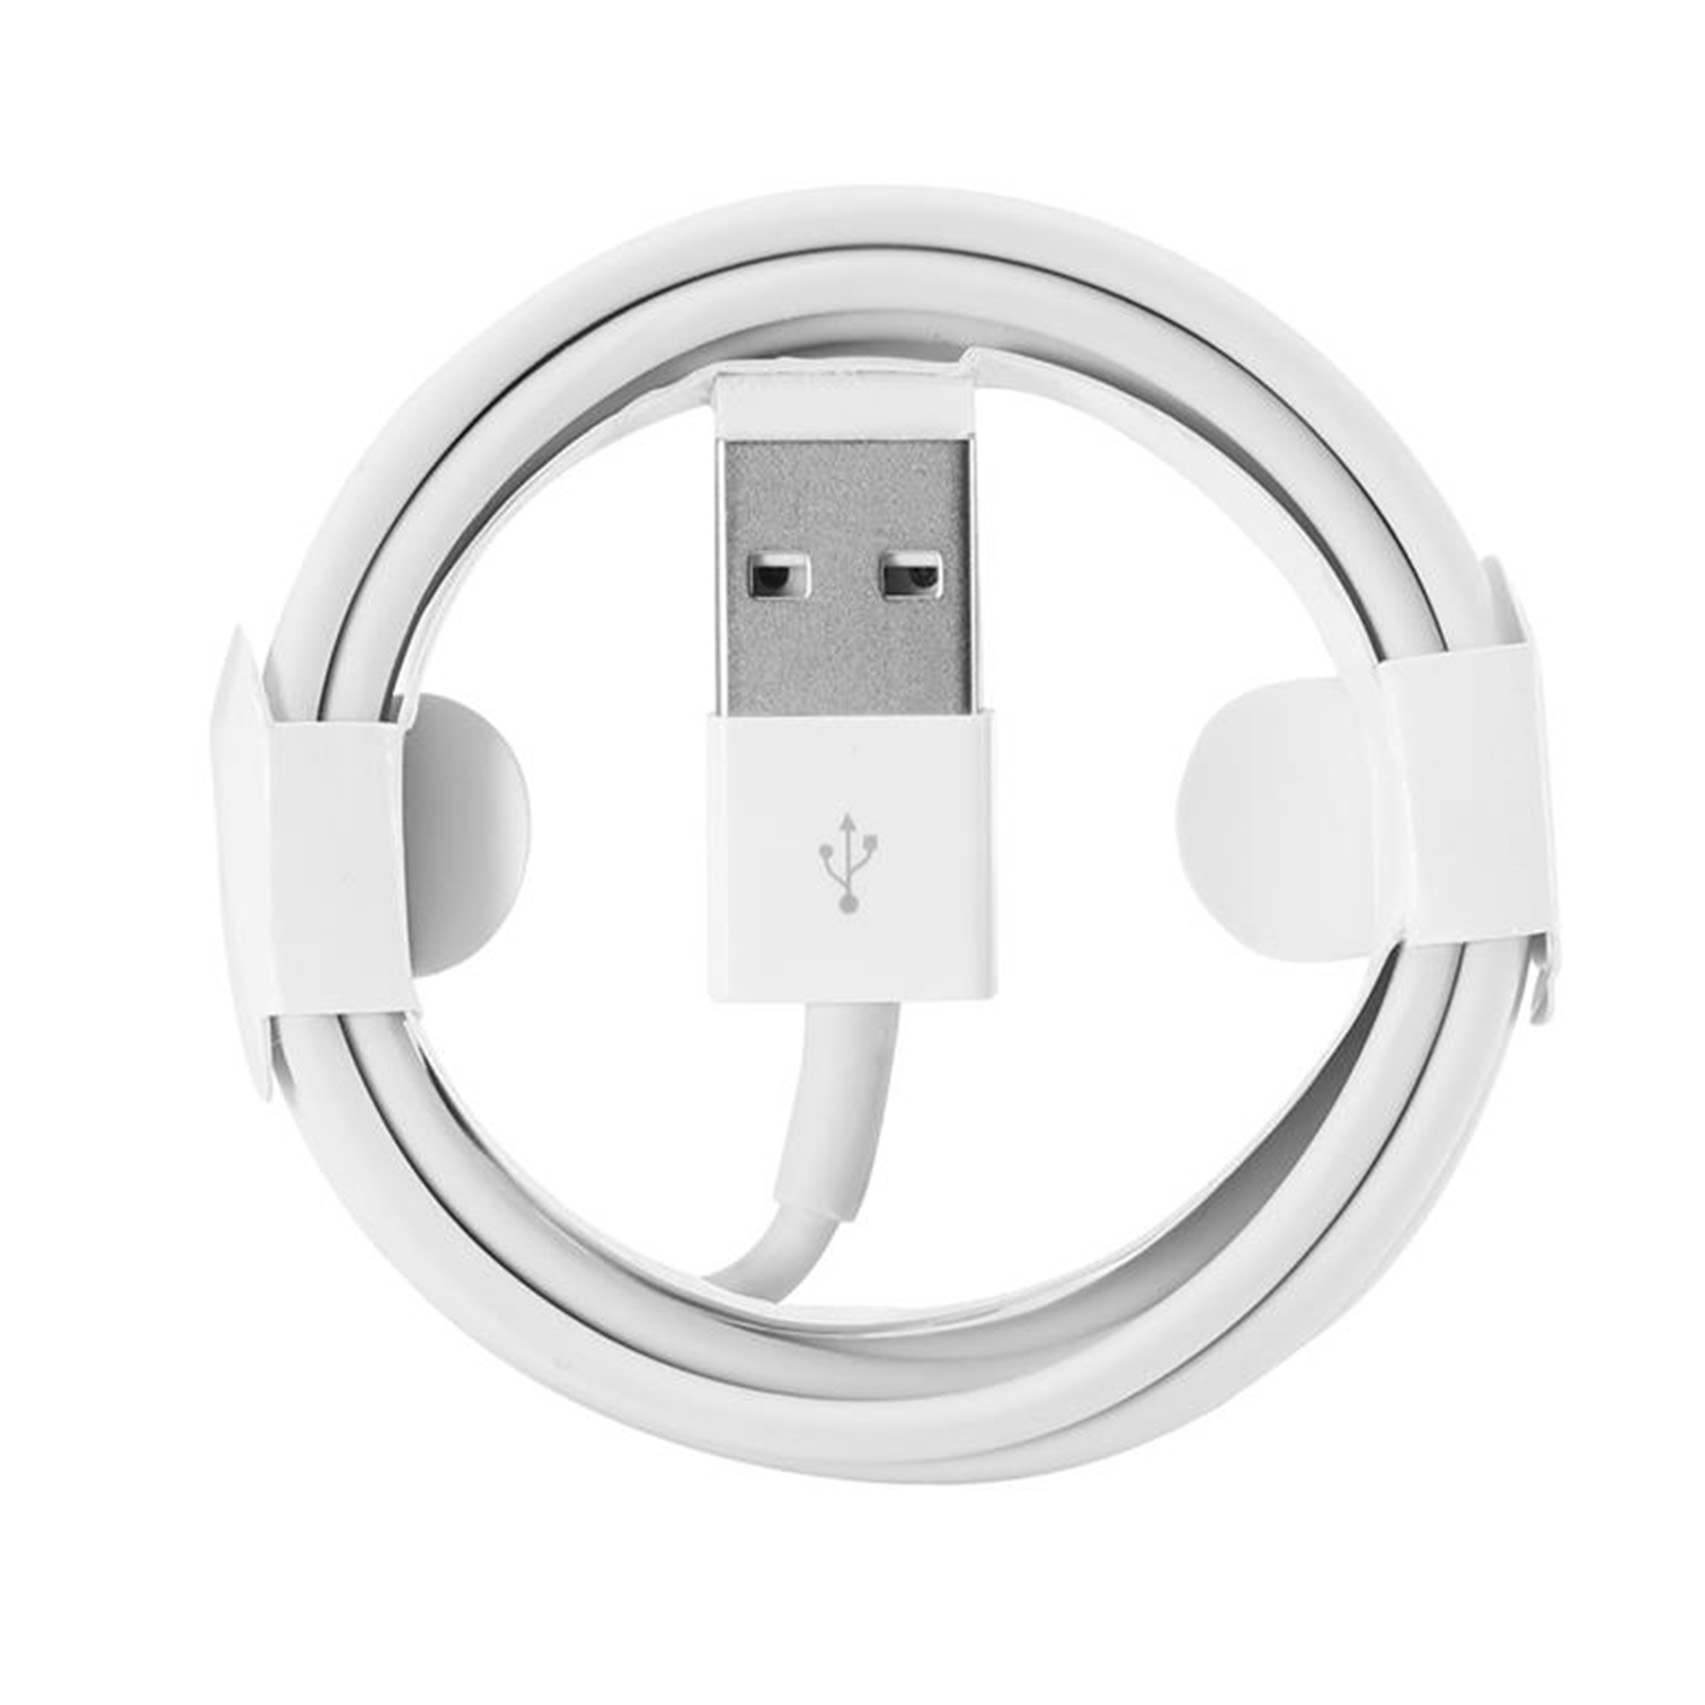 6x iPhone 7 Plus Lightning auf USB Kabel 1m Ladekabel